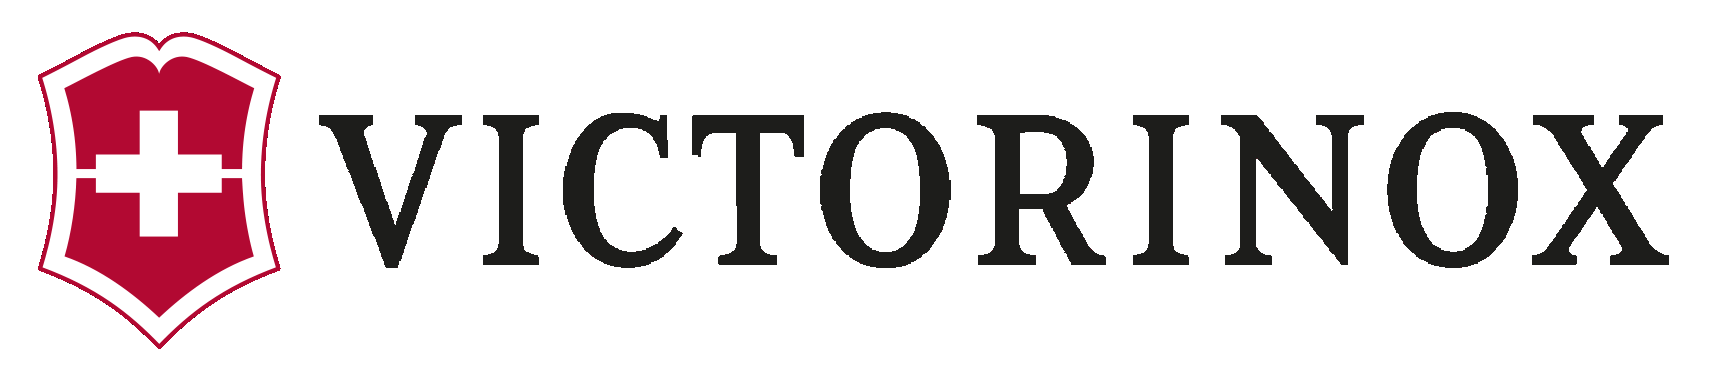 victorinox_logo